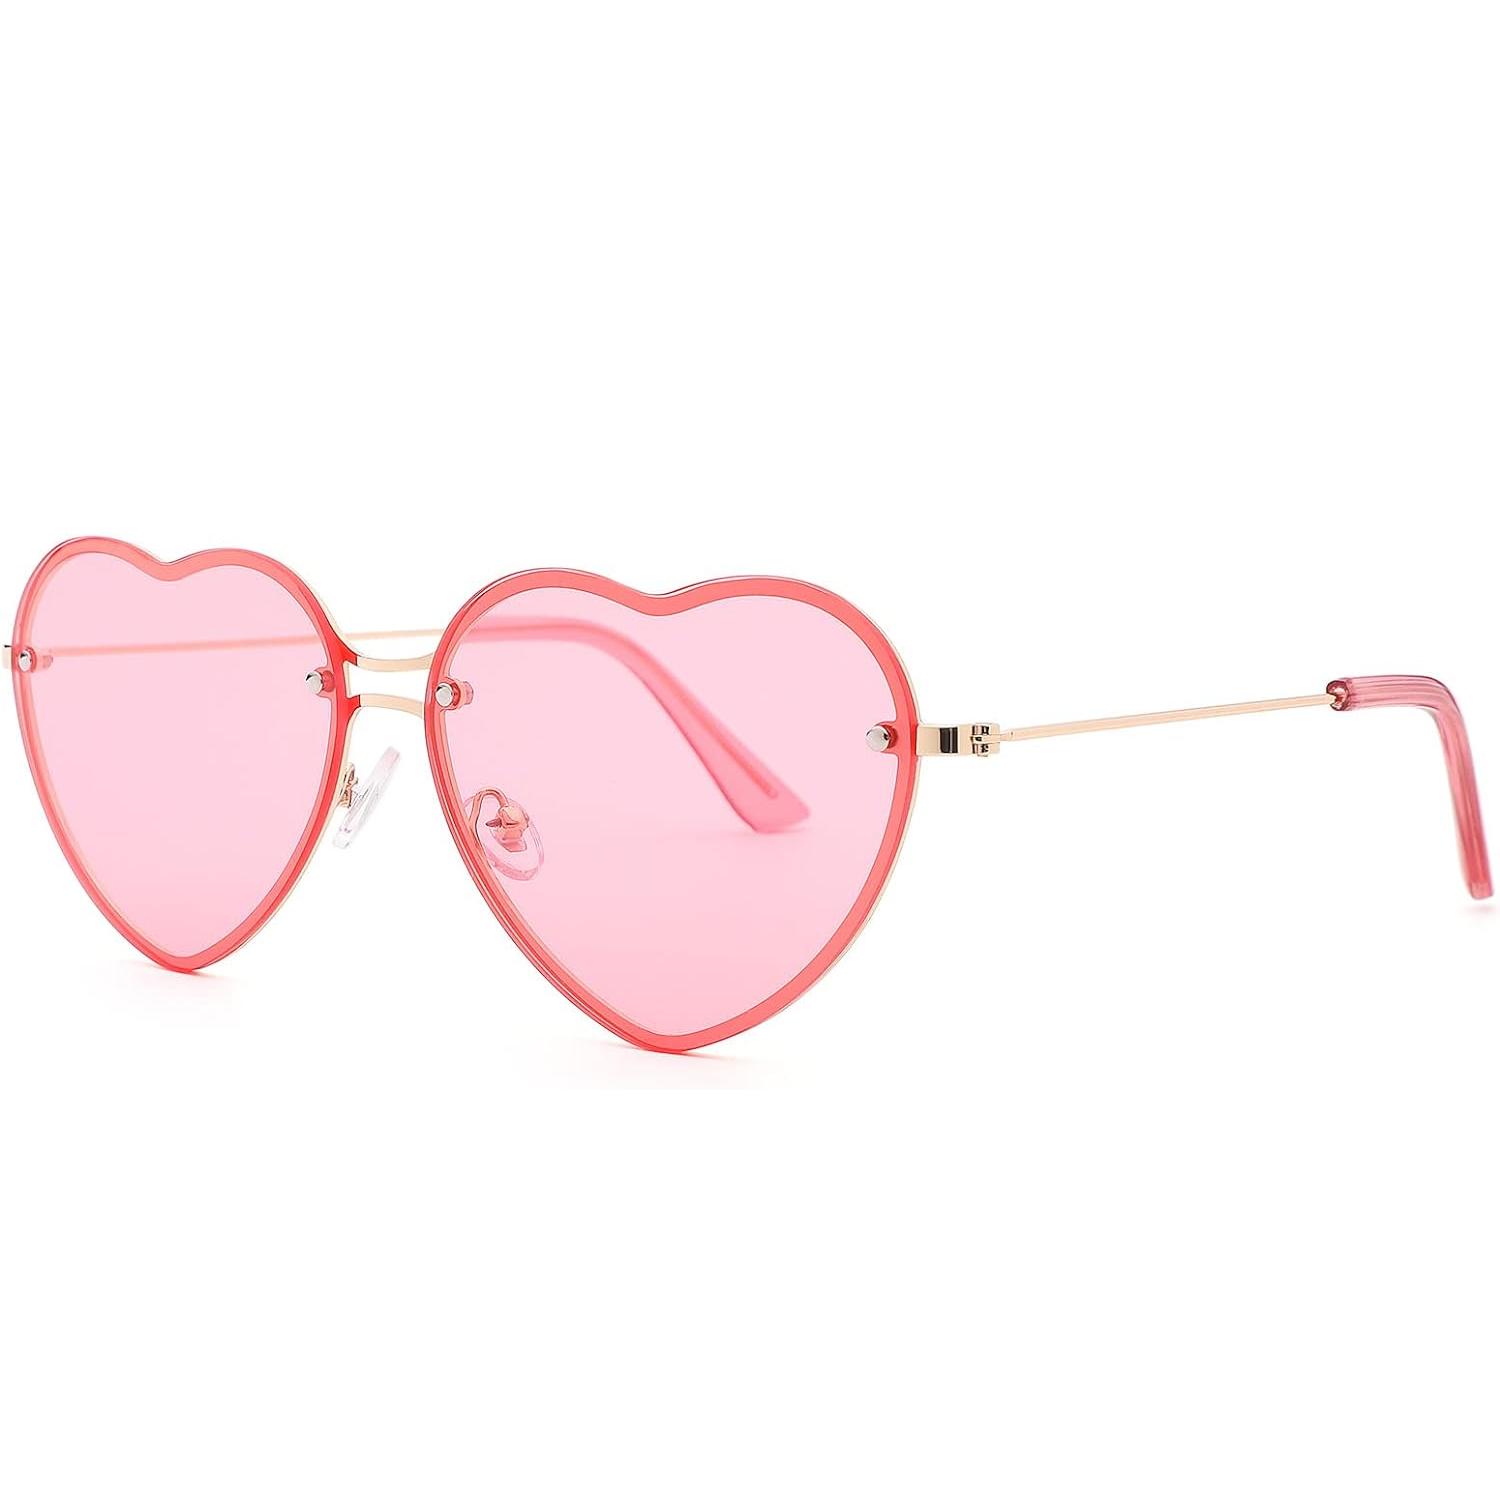 Chic Love Heart Rimless Sunglasses for Women